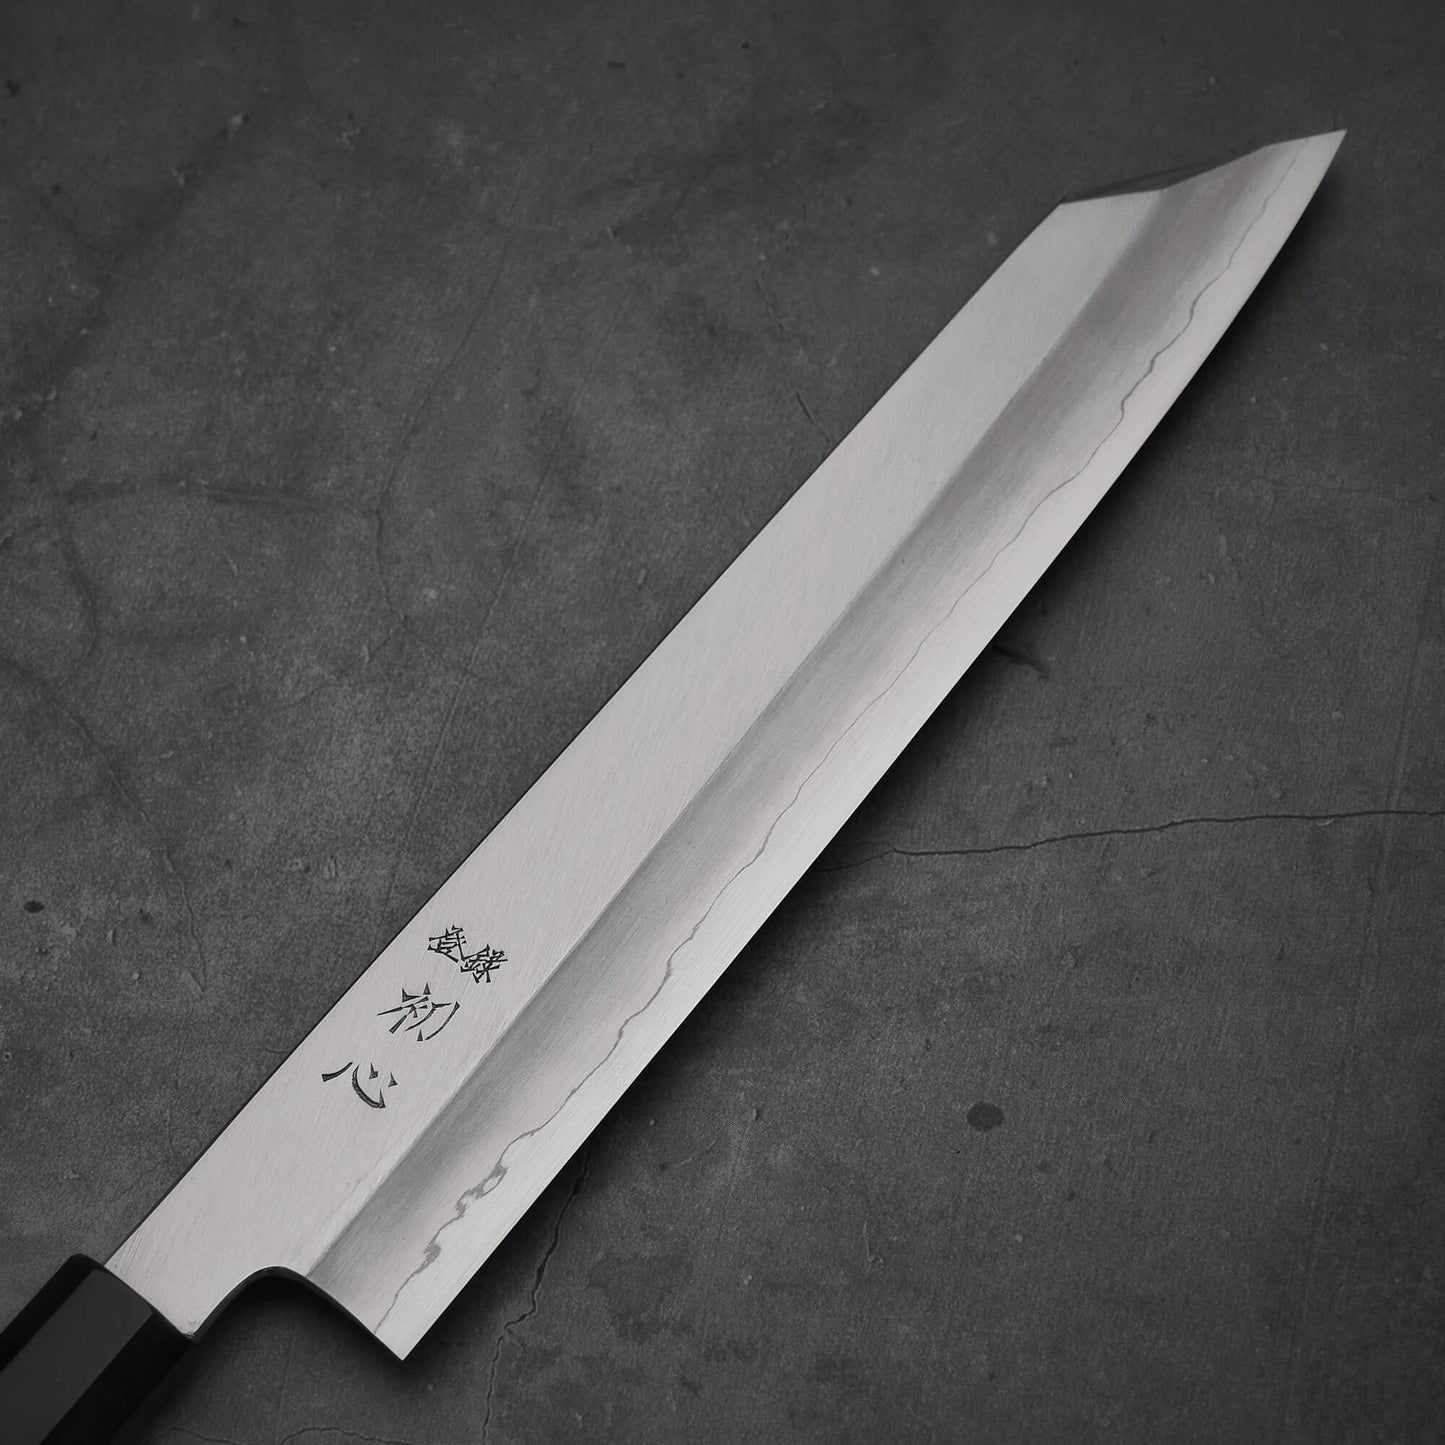 Close up view of the blade of Hatsukokoro Nakagawa ginsan kiritsuke gyuto knife. Image shows right side